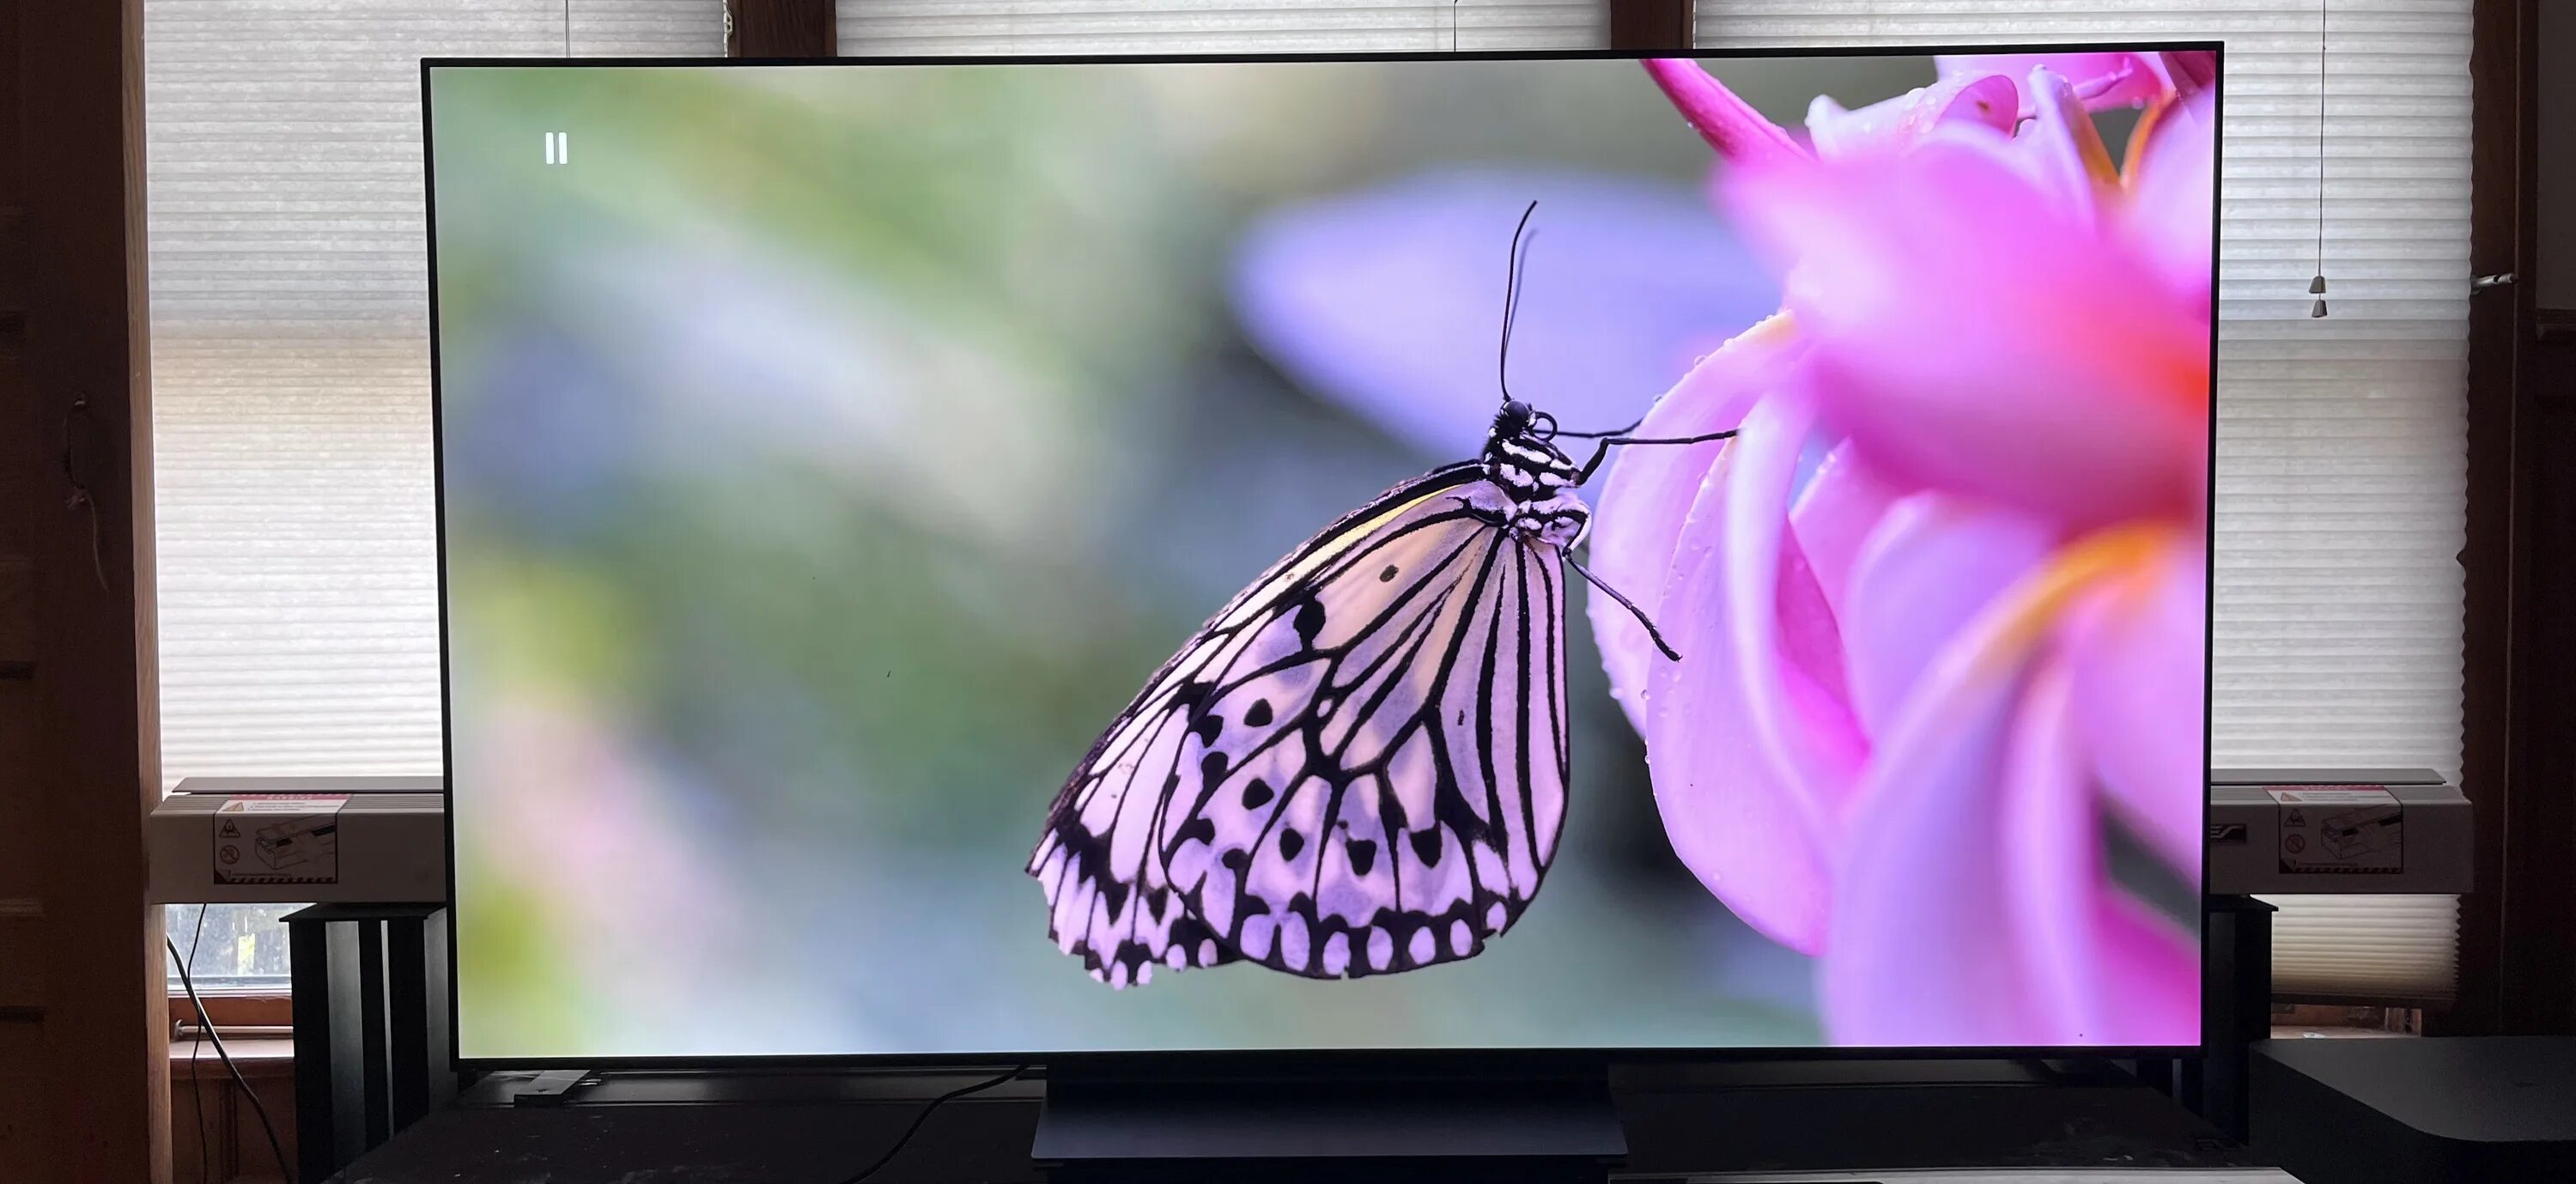 Samsung телевизоры 2023 купить. LG c3 OLED. LG oledc3. LG c3 OLED 55. LG g3 OLED подставка.